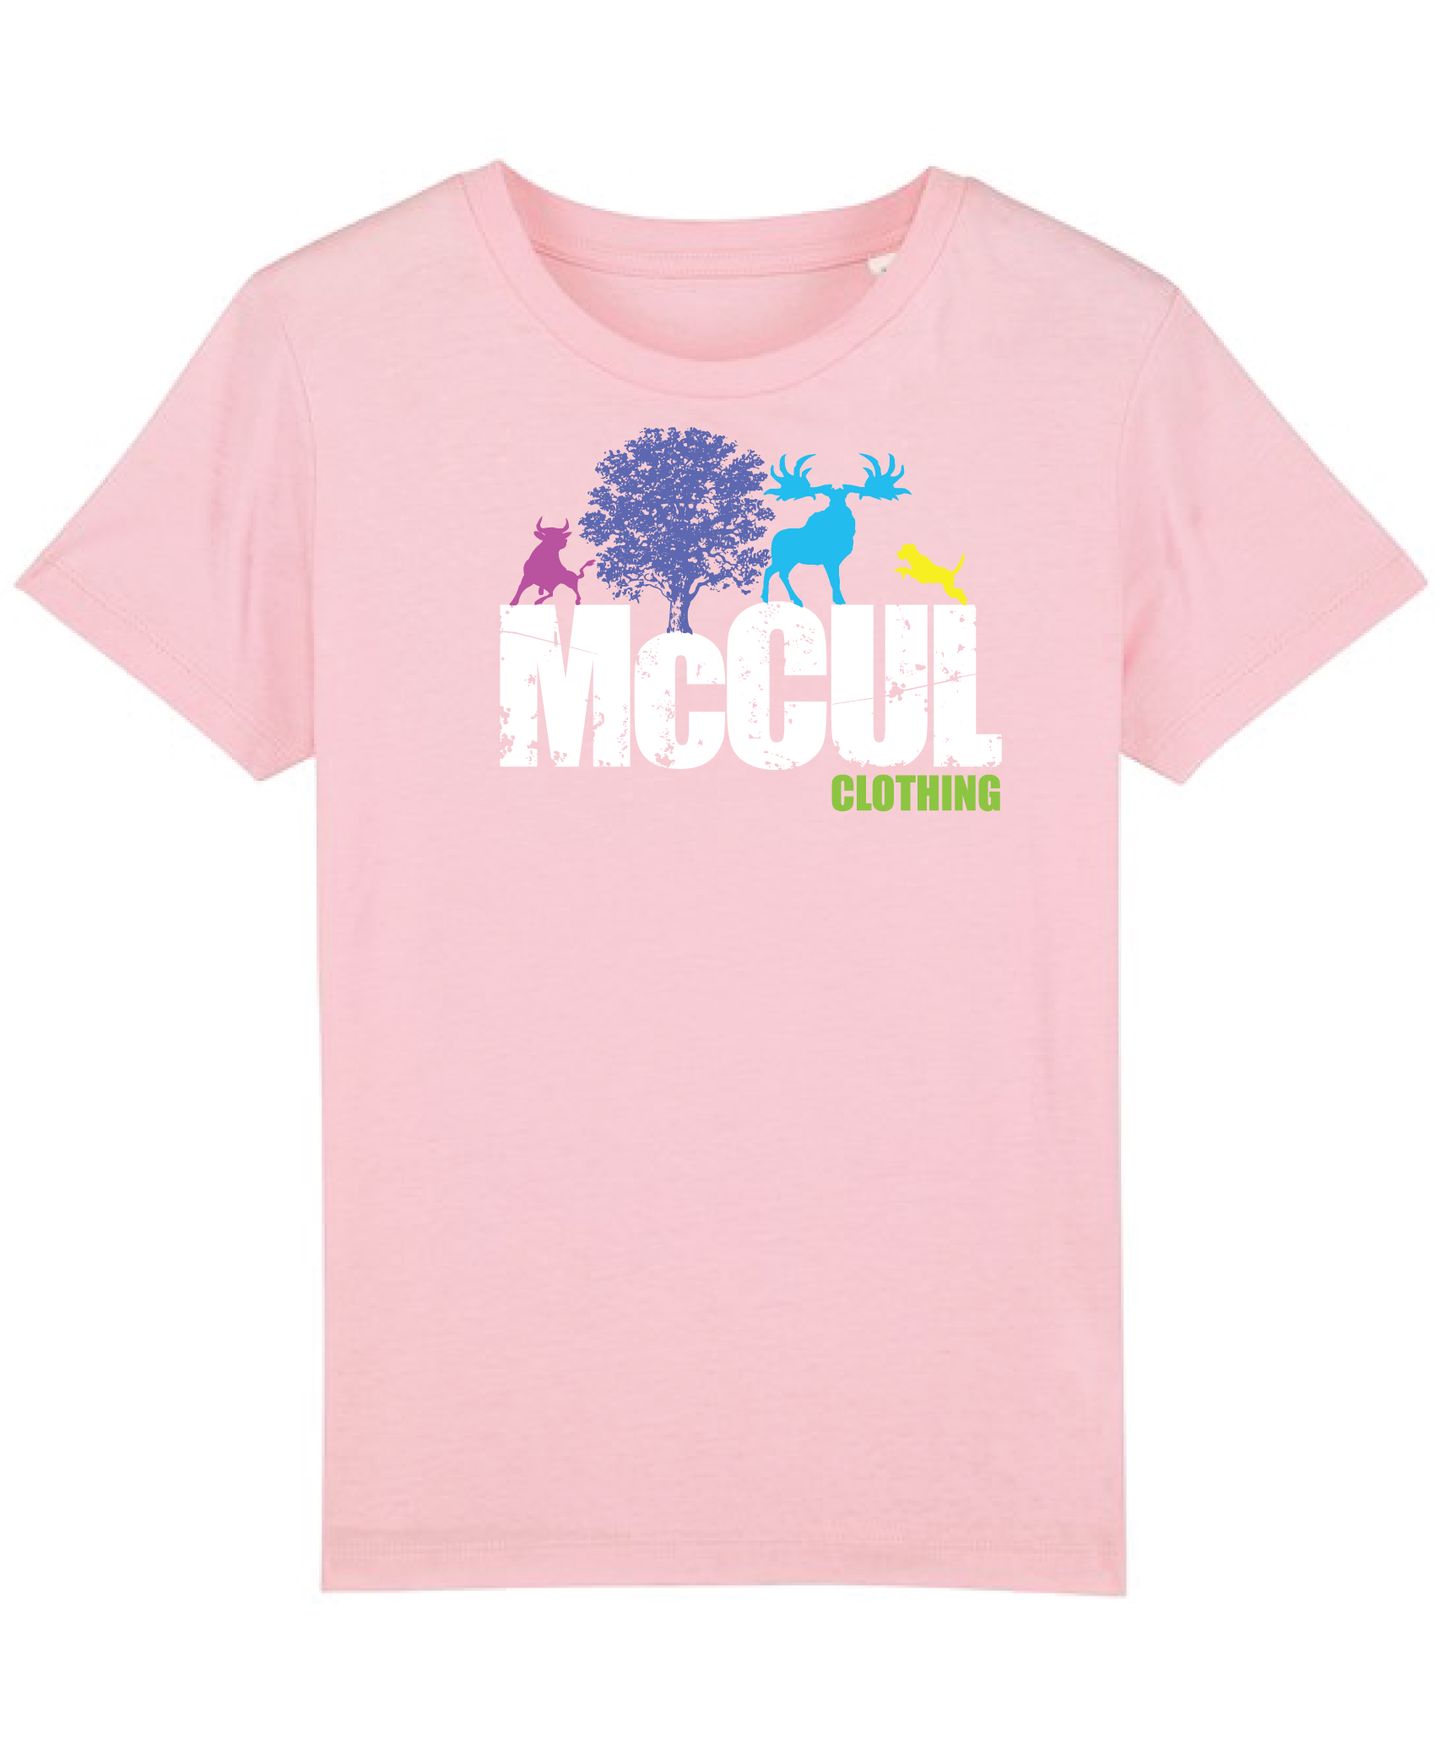 Girls New Pink Organic tee shirt with McCul print